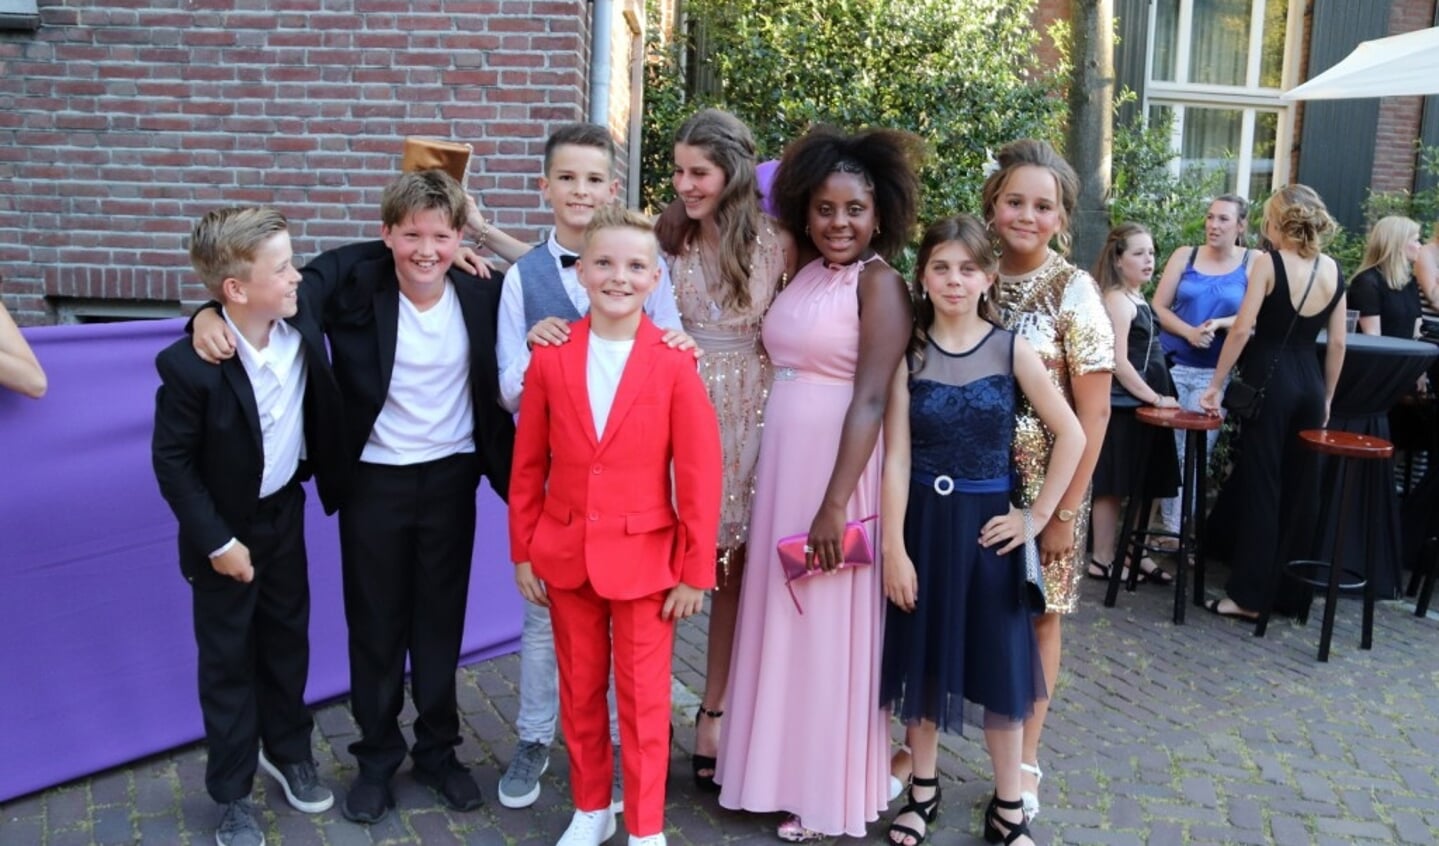 Nistelrode - Gala Bobz 2019